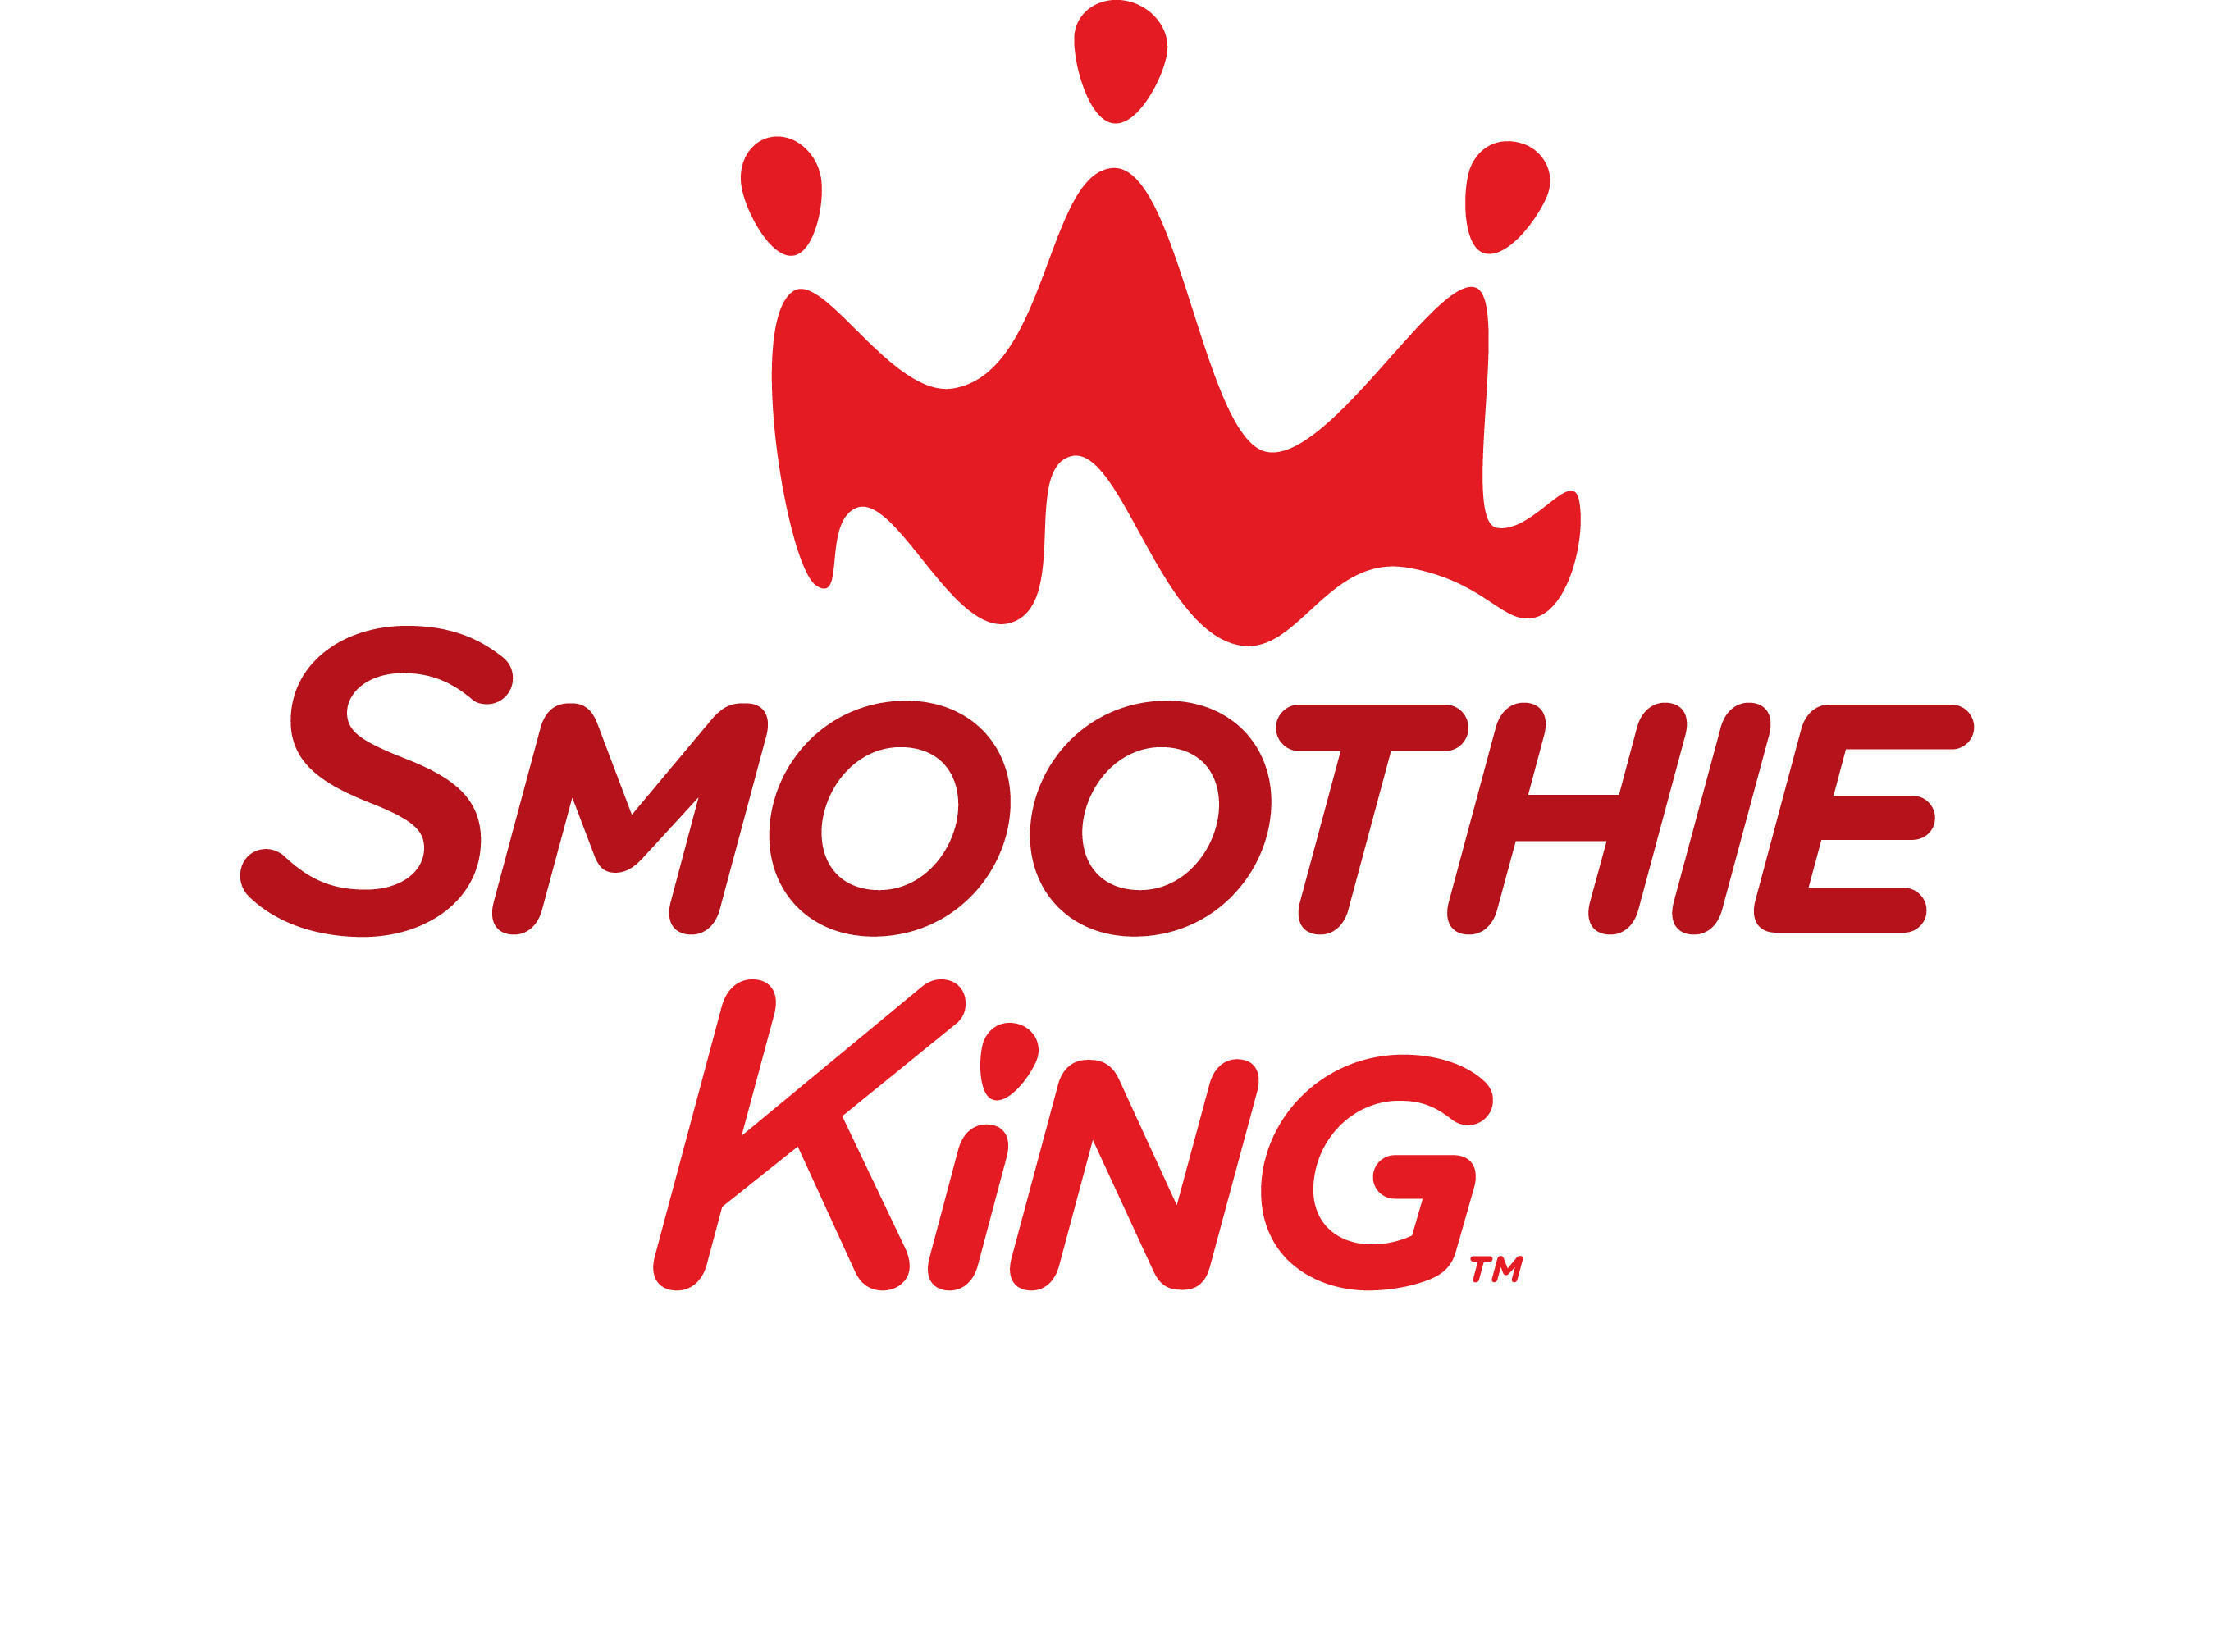 Smoothie King logo. (PRNewsFoto/Smoothie King) (PRNewsFoto/)